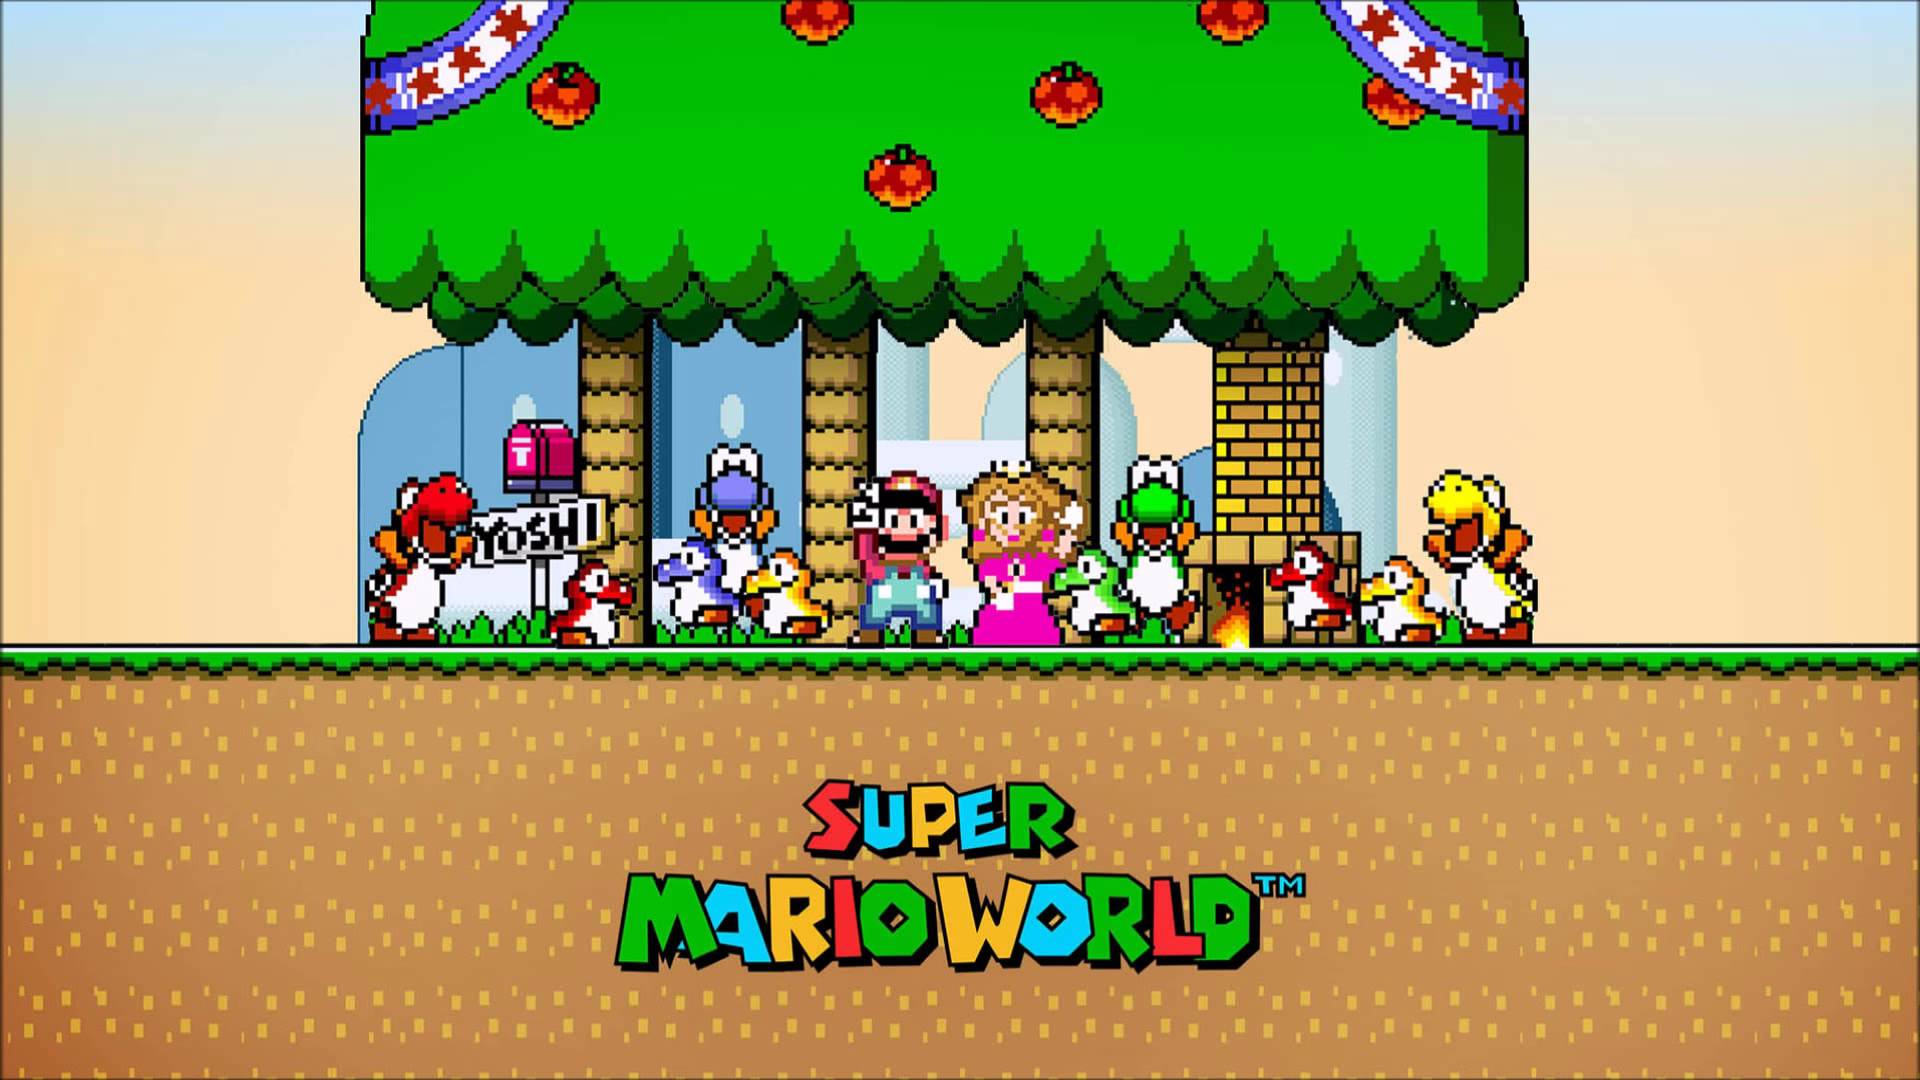 Super Mario World Backgrounds, Compatible - PC, Mobile, Gadgets| 1920x1080 px